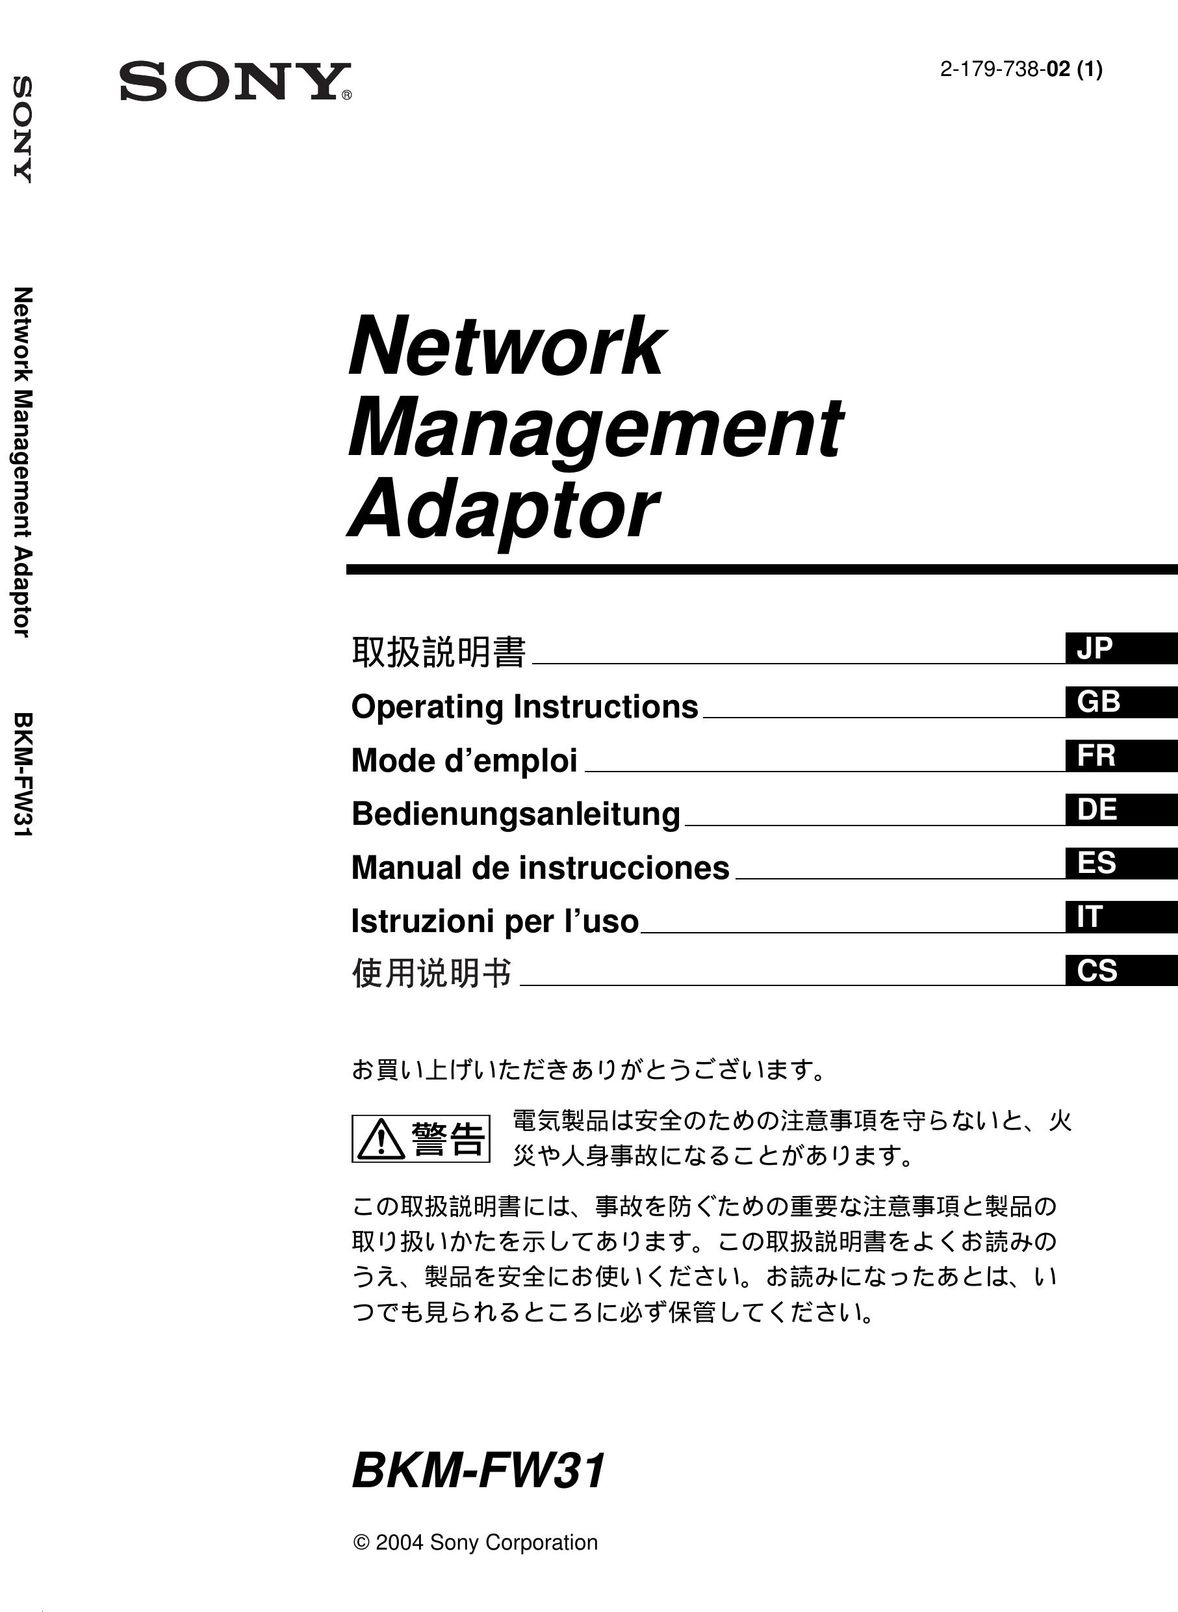 Sony BKM-FW31 Network Card User Manual